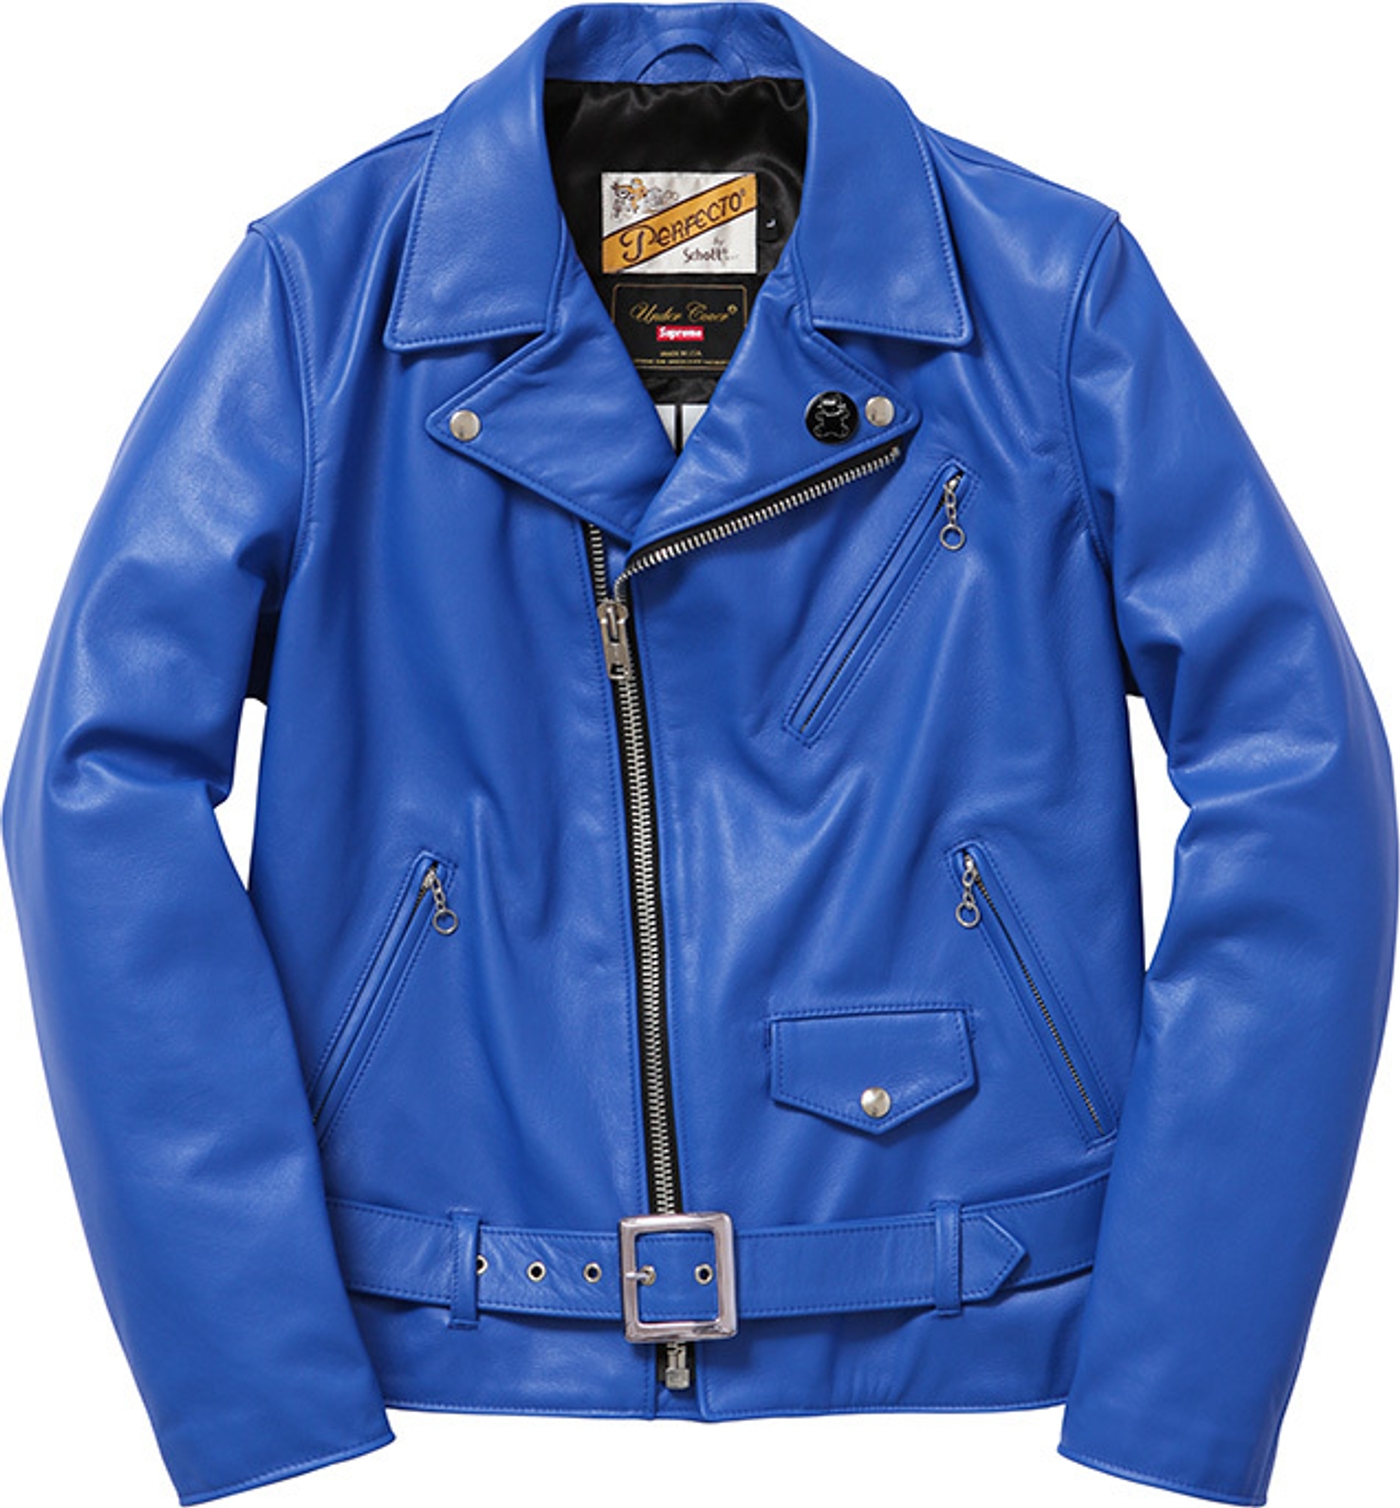 Perfecto Leather Jacket (5/31)